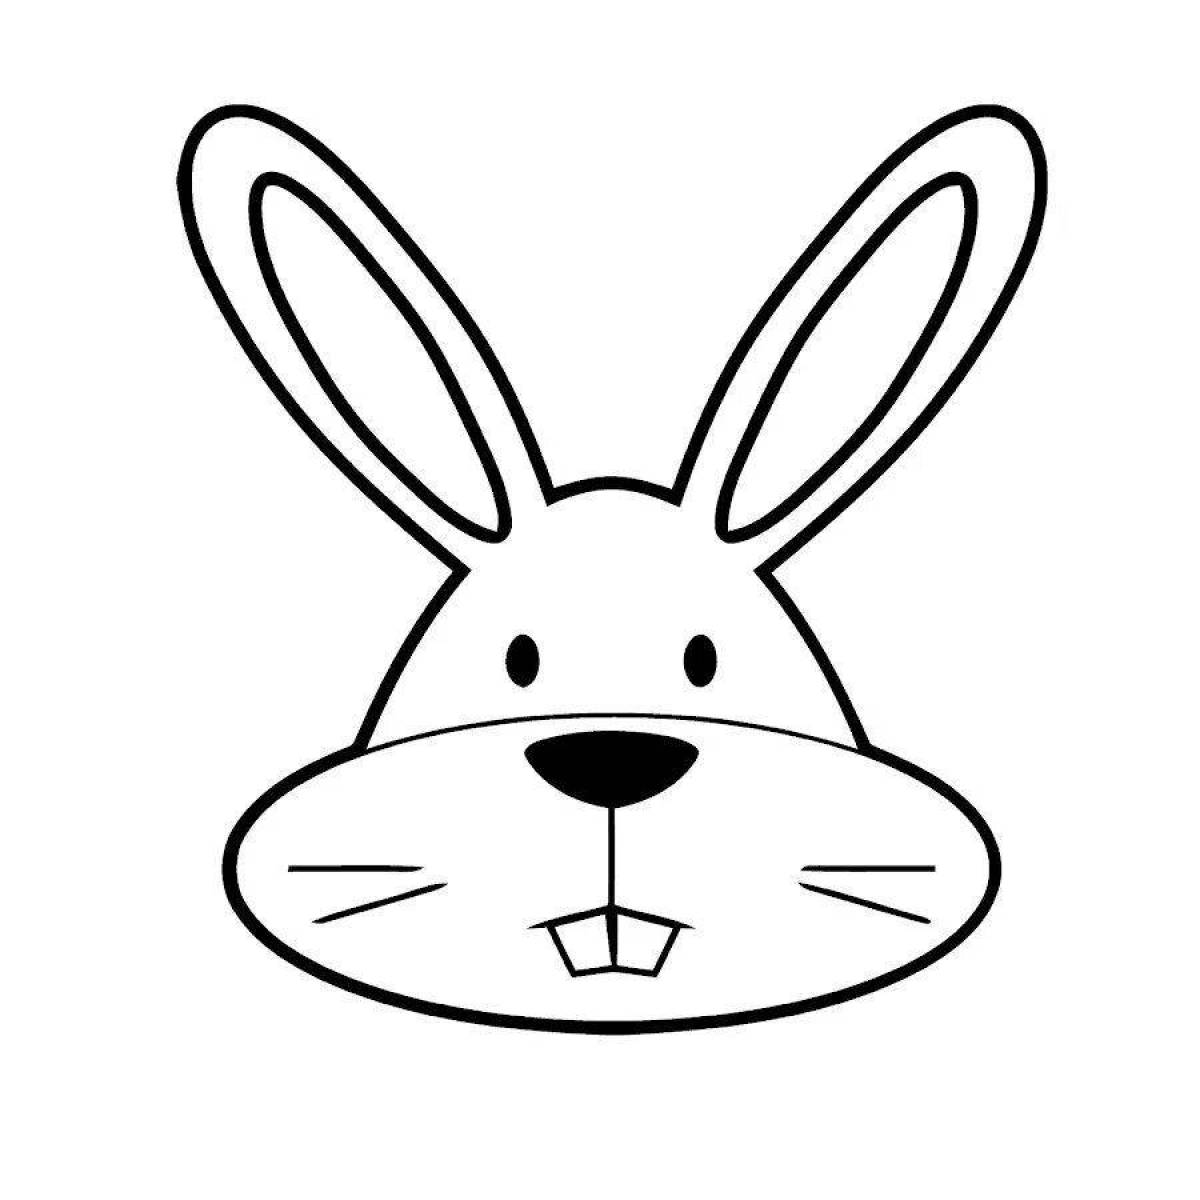 Bunny head #2